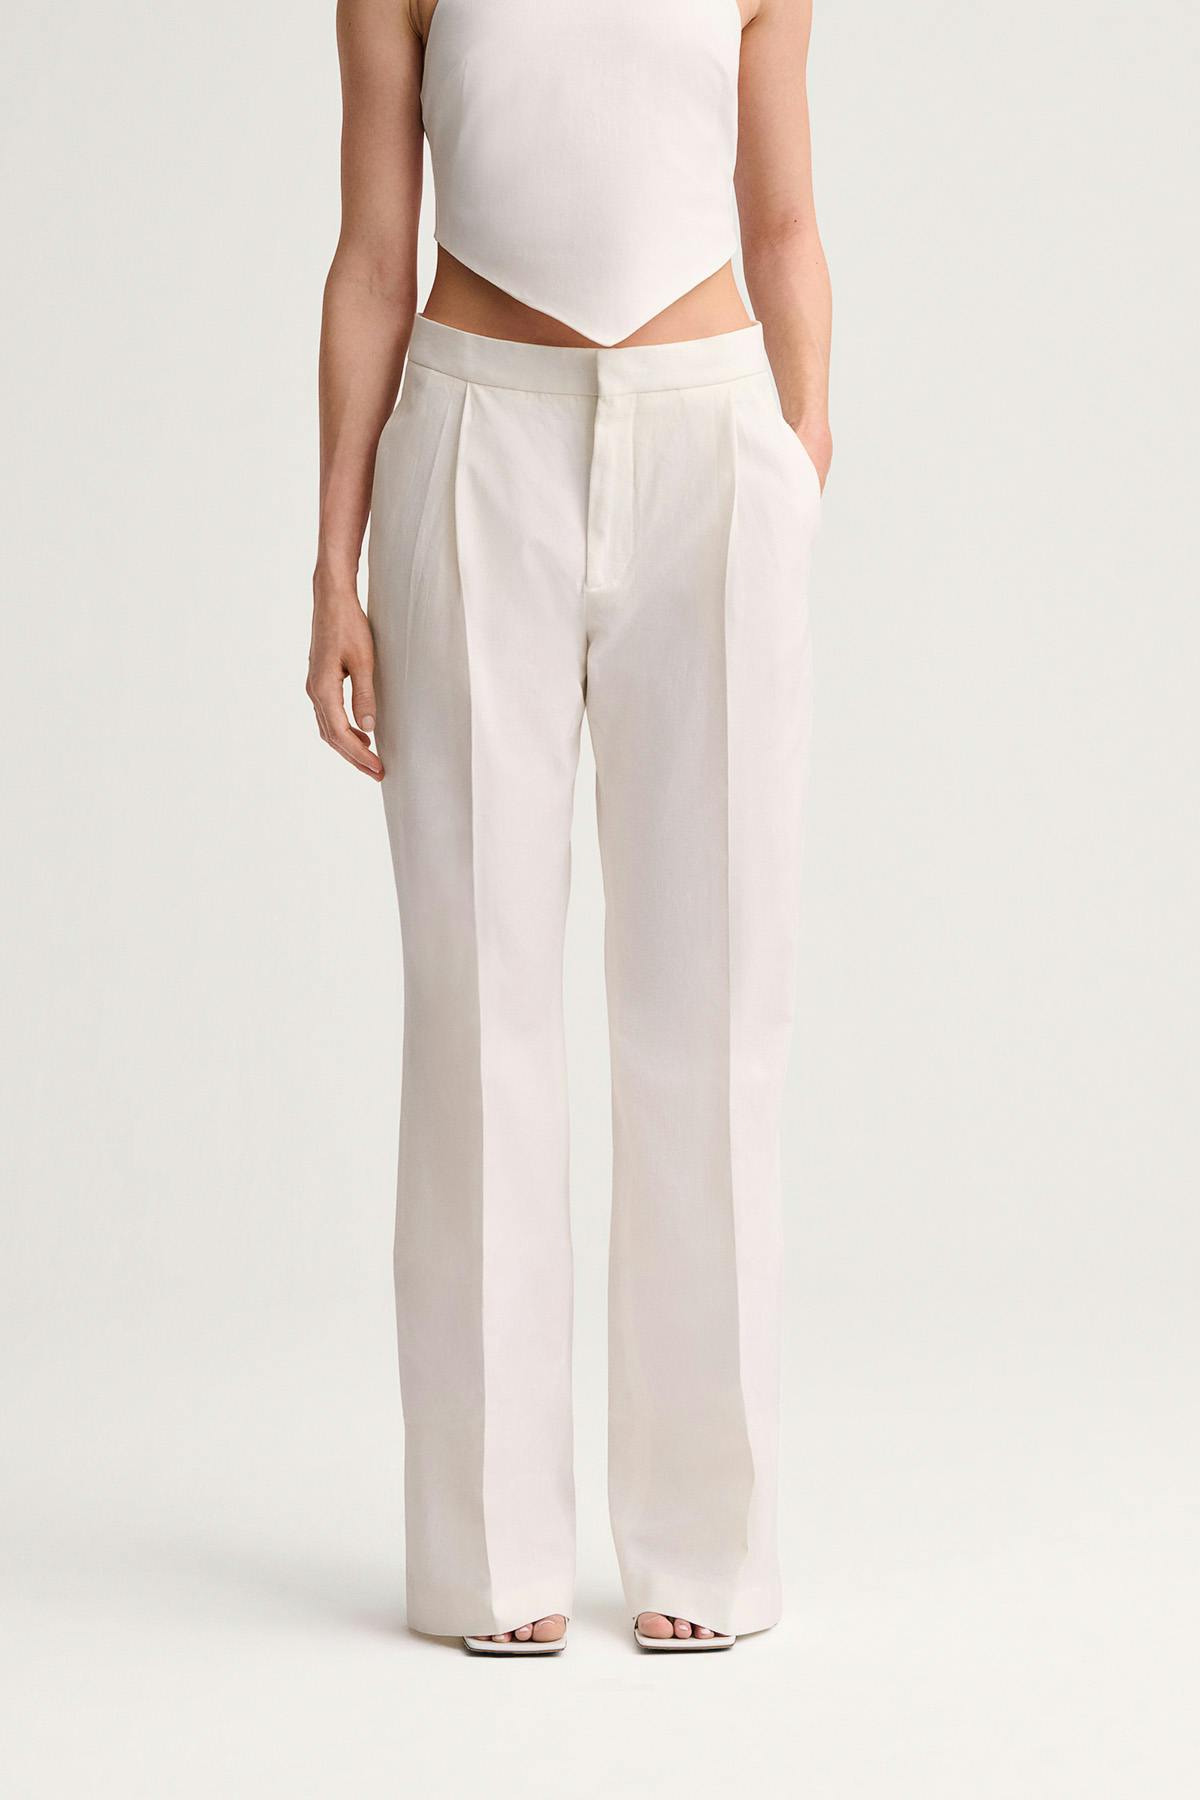 https://a.storyblok.com/f/199965/1200x1800/31c9db3586/celino-trousers-off-white.jpg